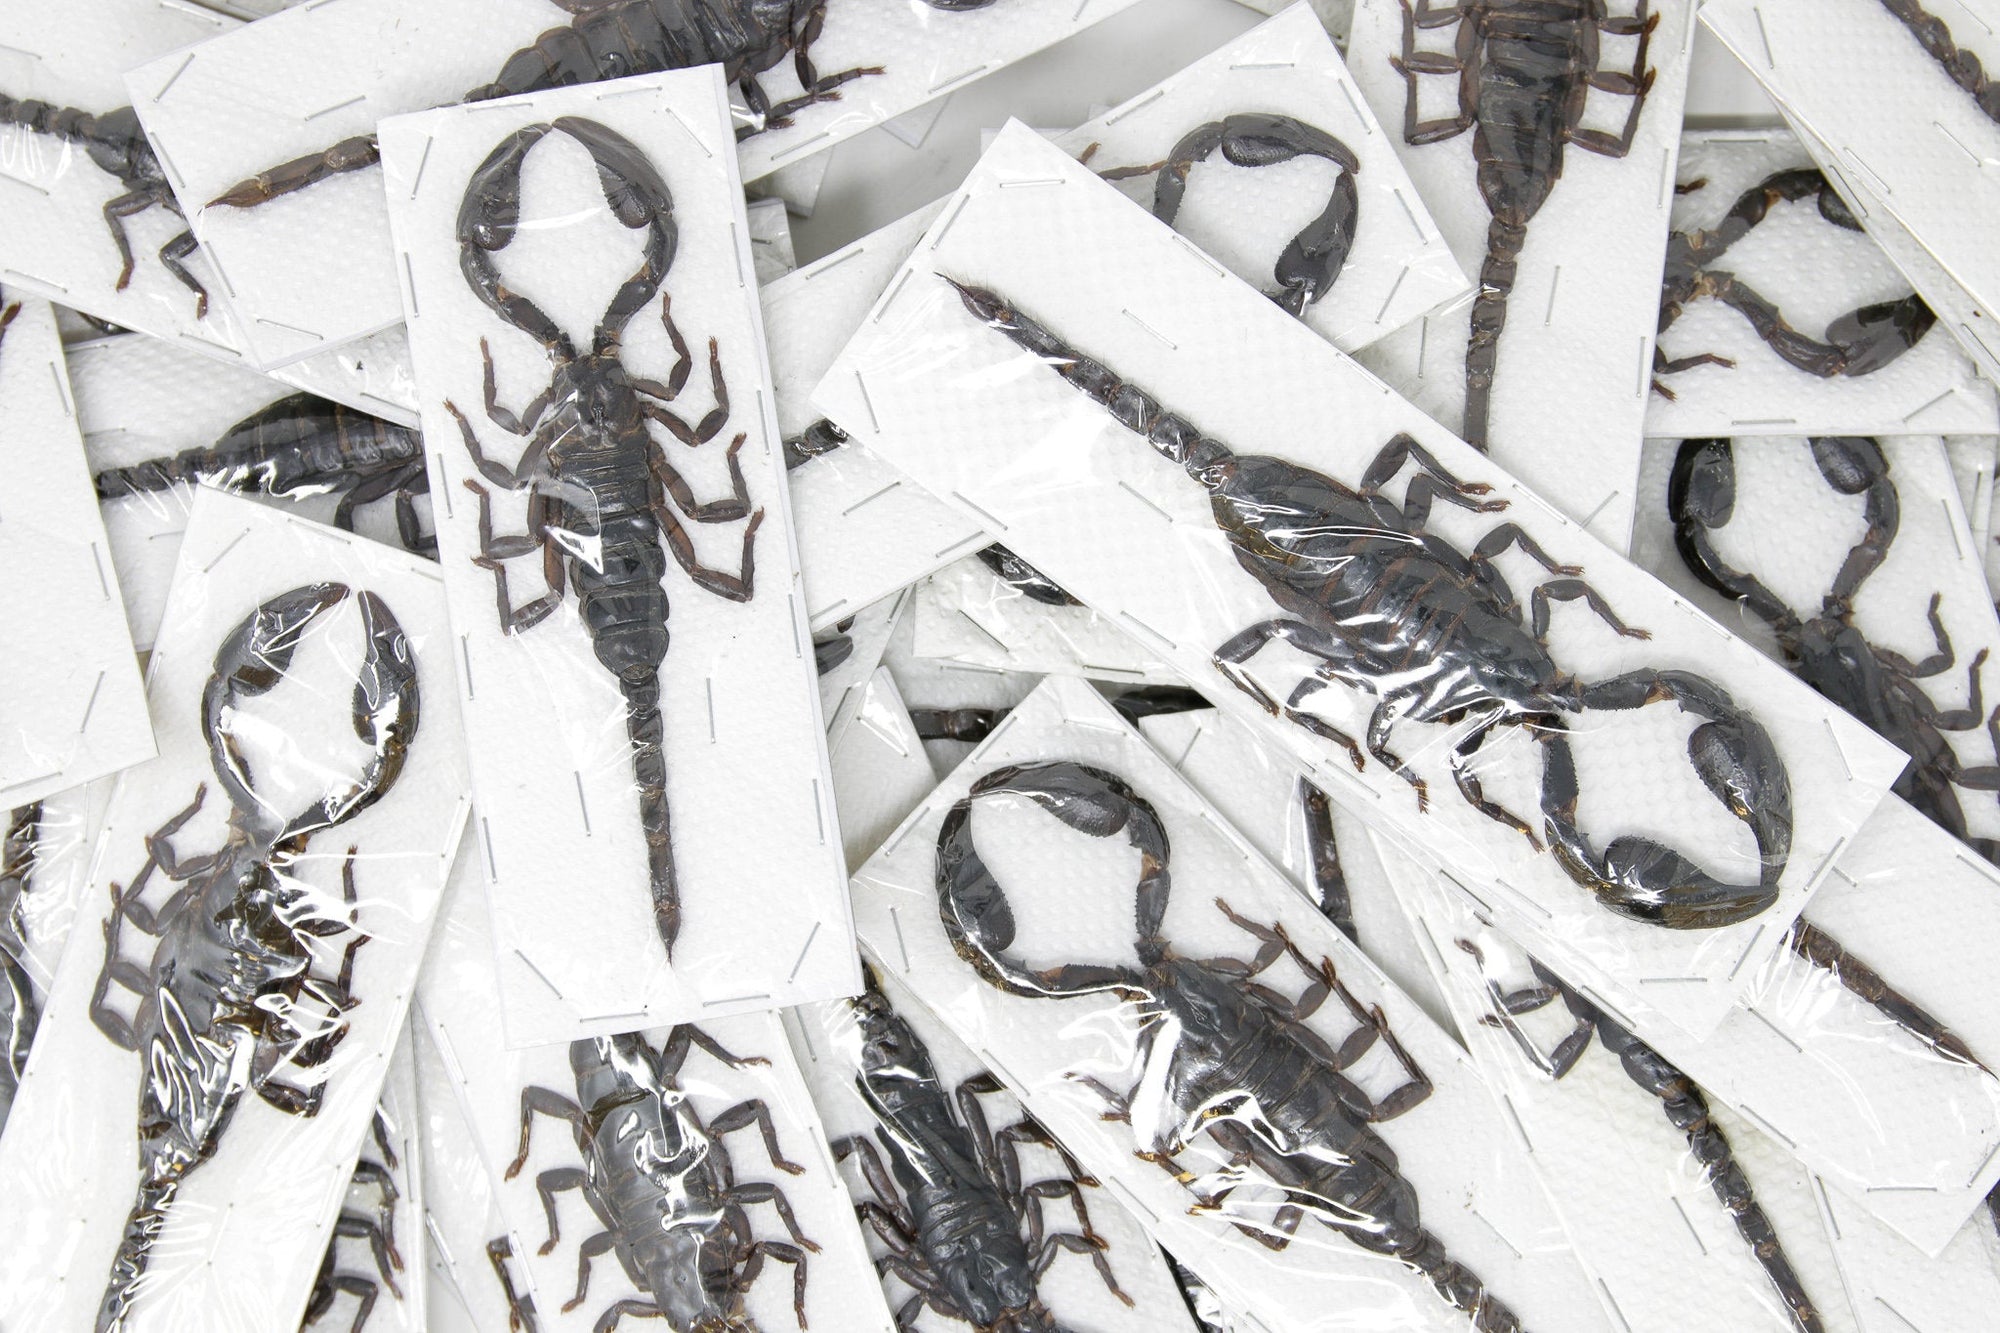 EXTRA LARGE 7" Scorpions (Heterometrus spinifer) 175-185mm long, A1 Specimens